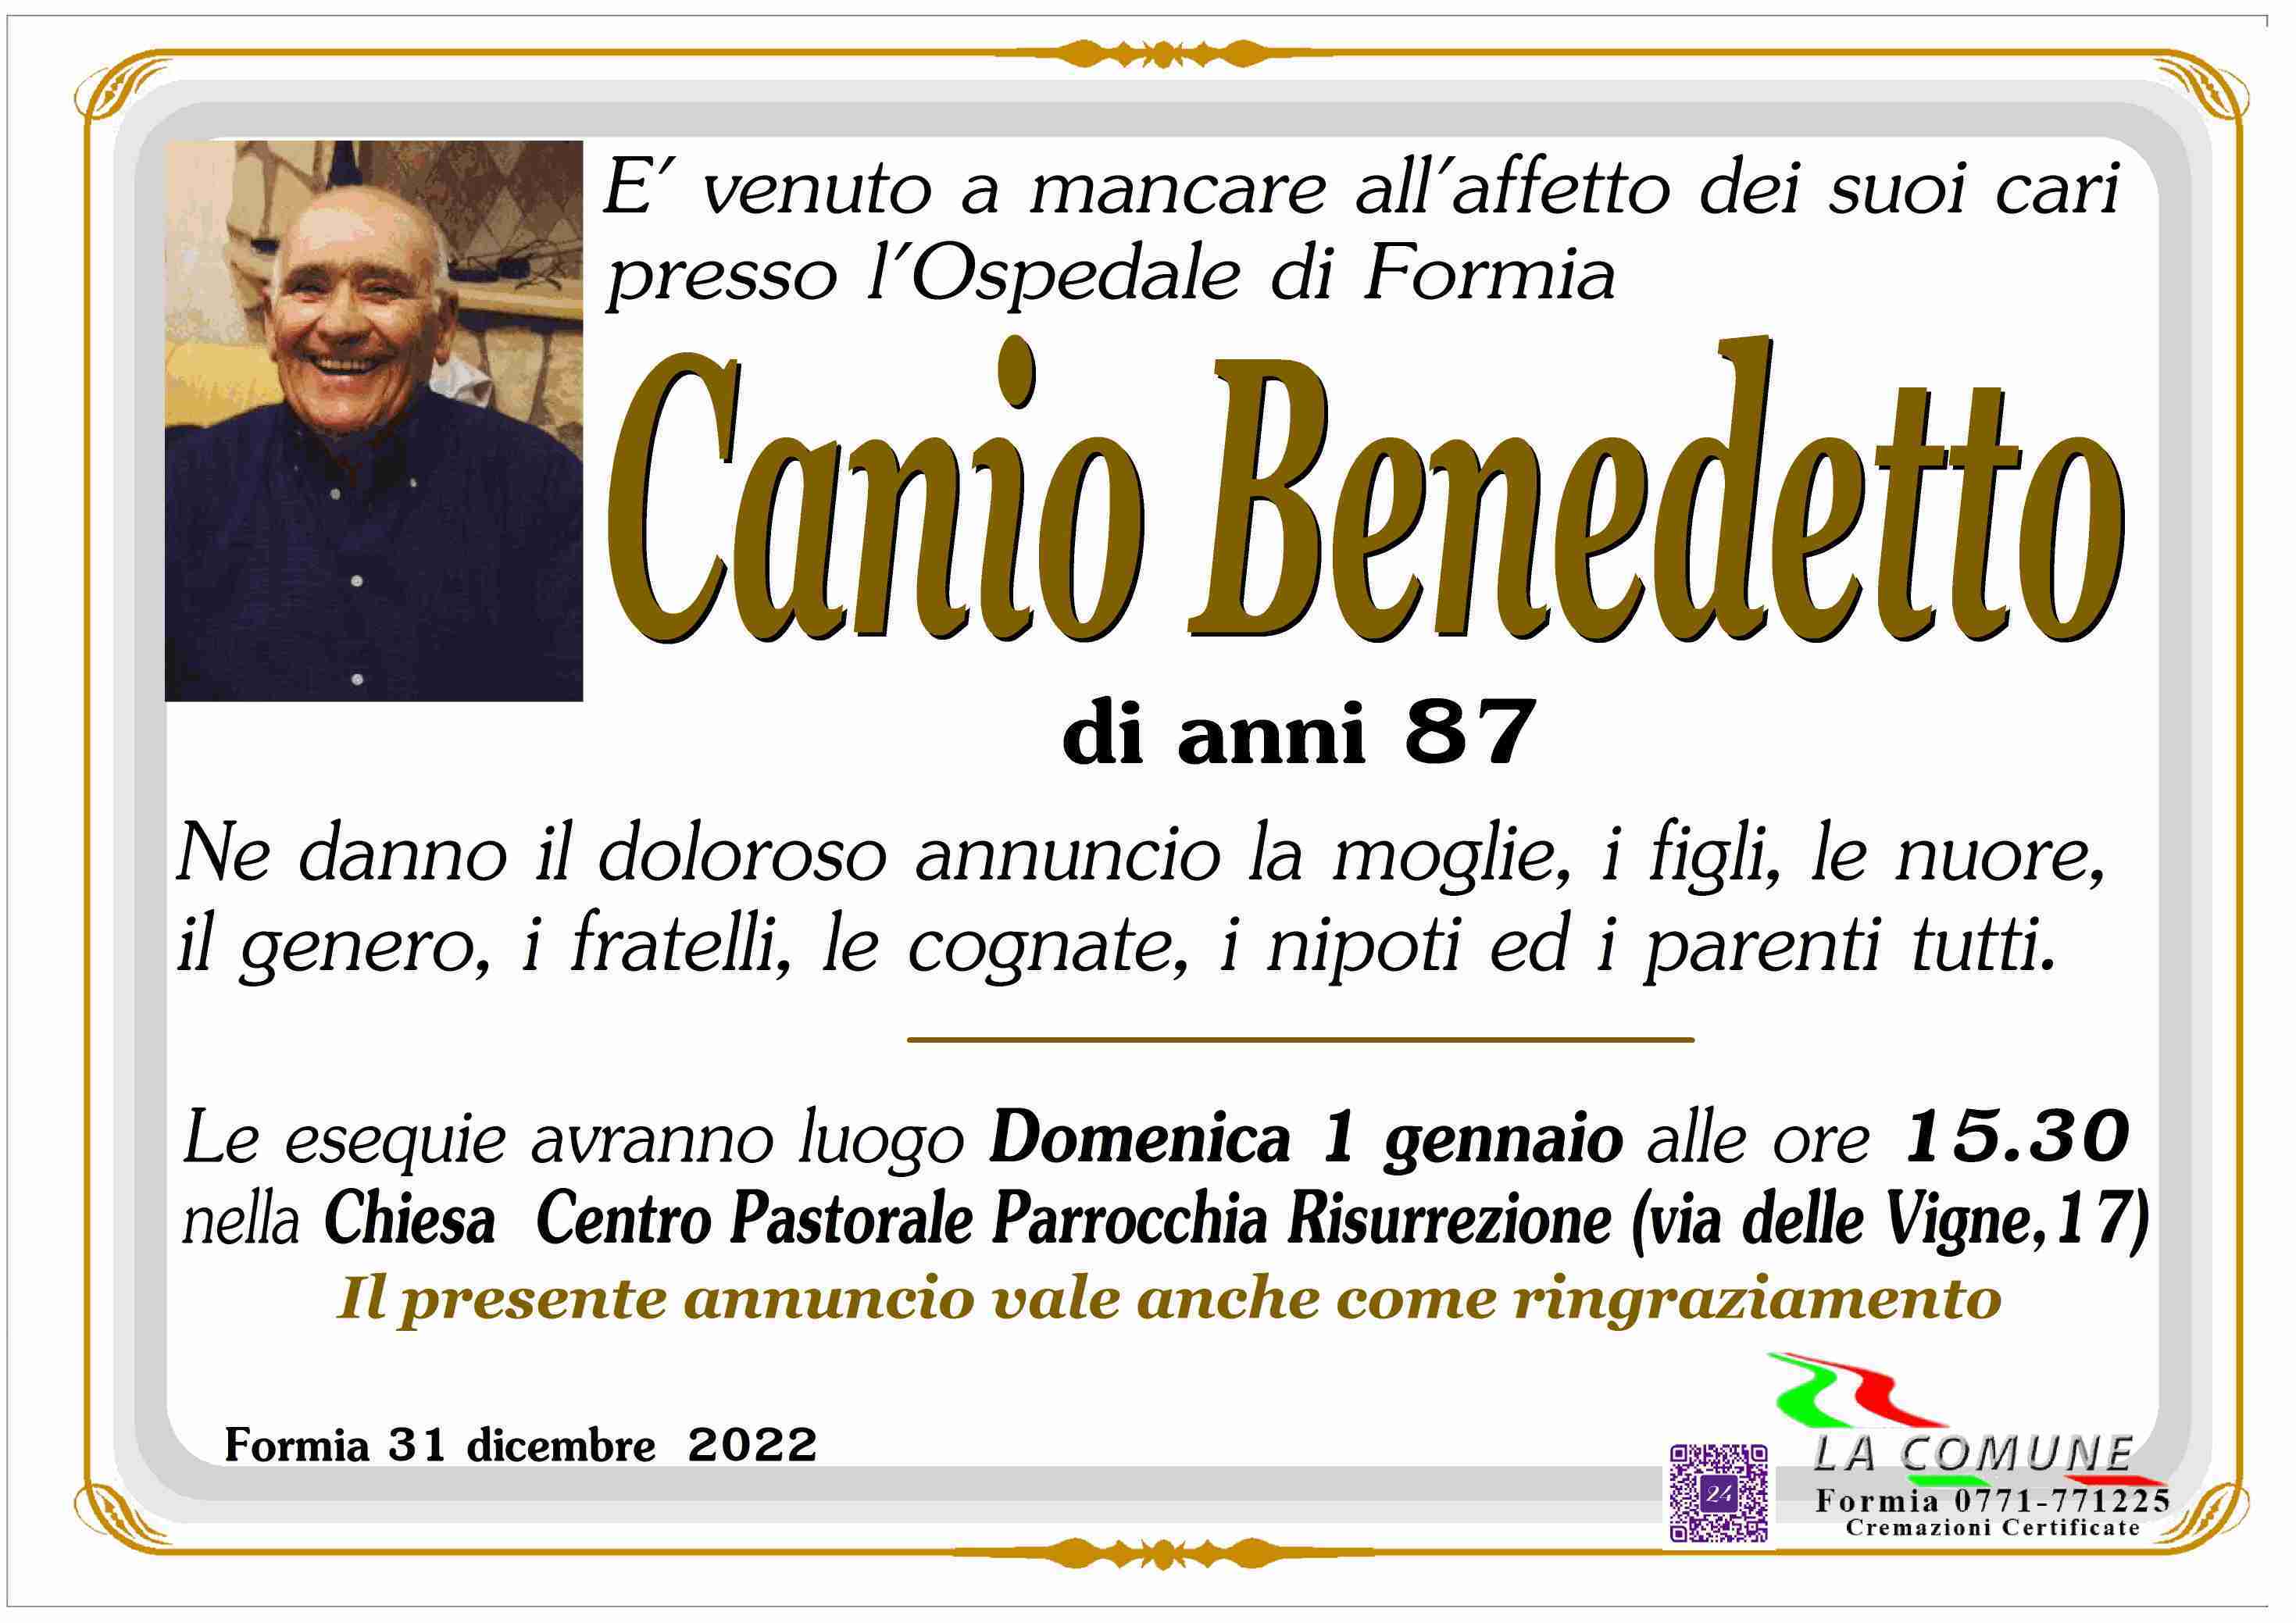 Canio Benrdrtto